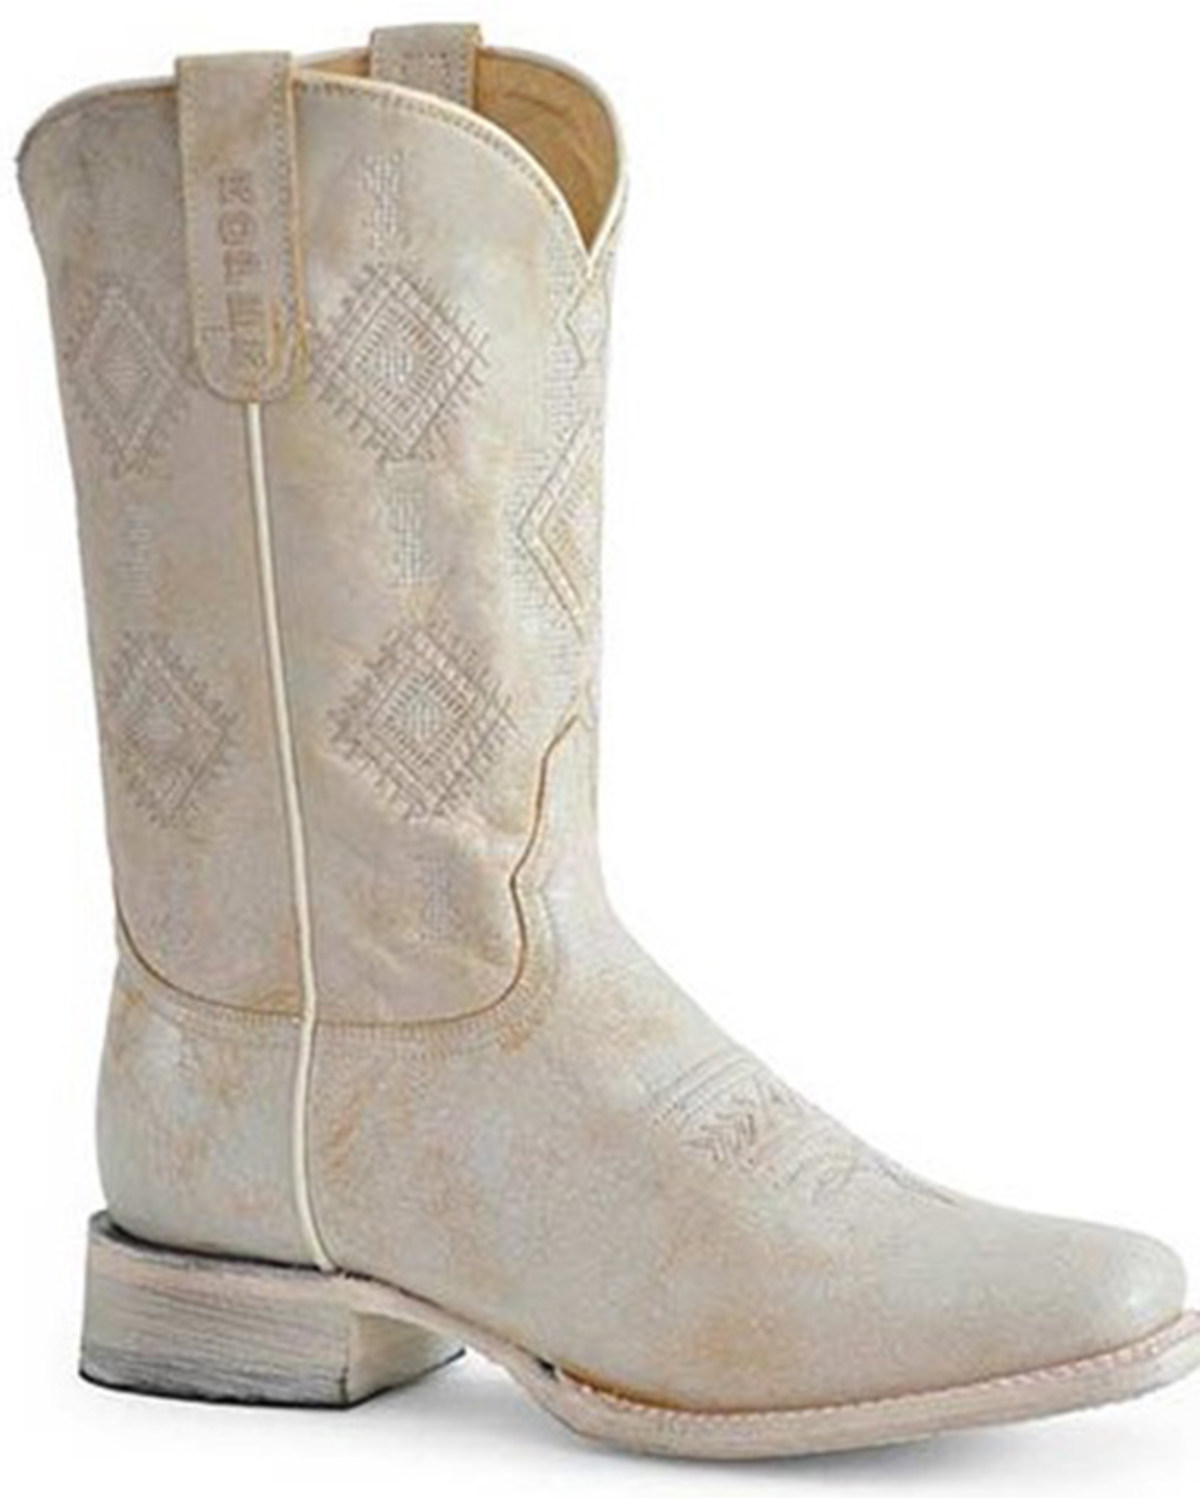 Roper Women's Southwestern Western Boots - Square Toe